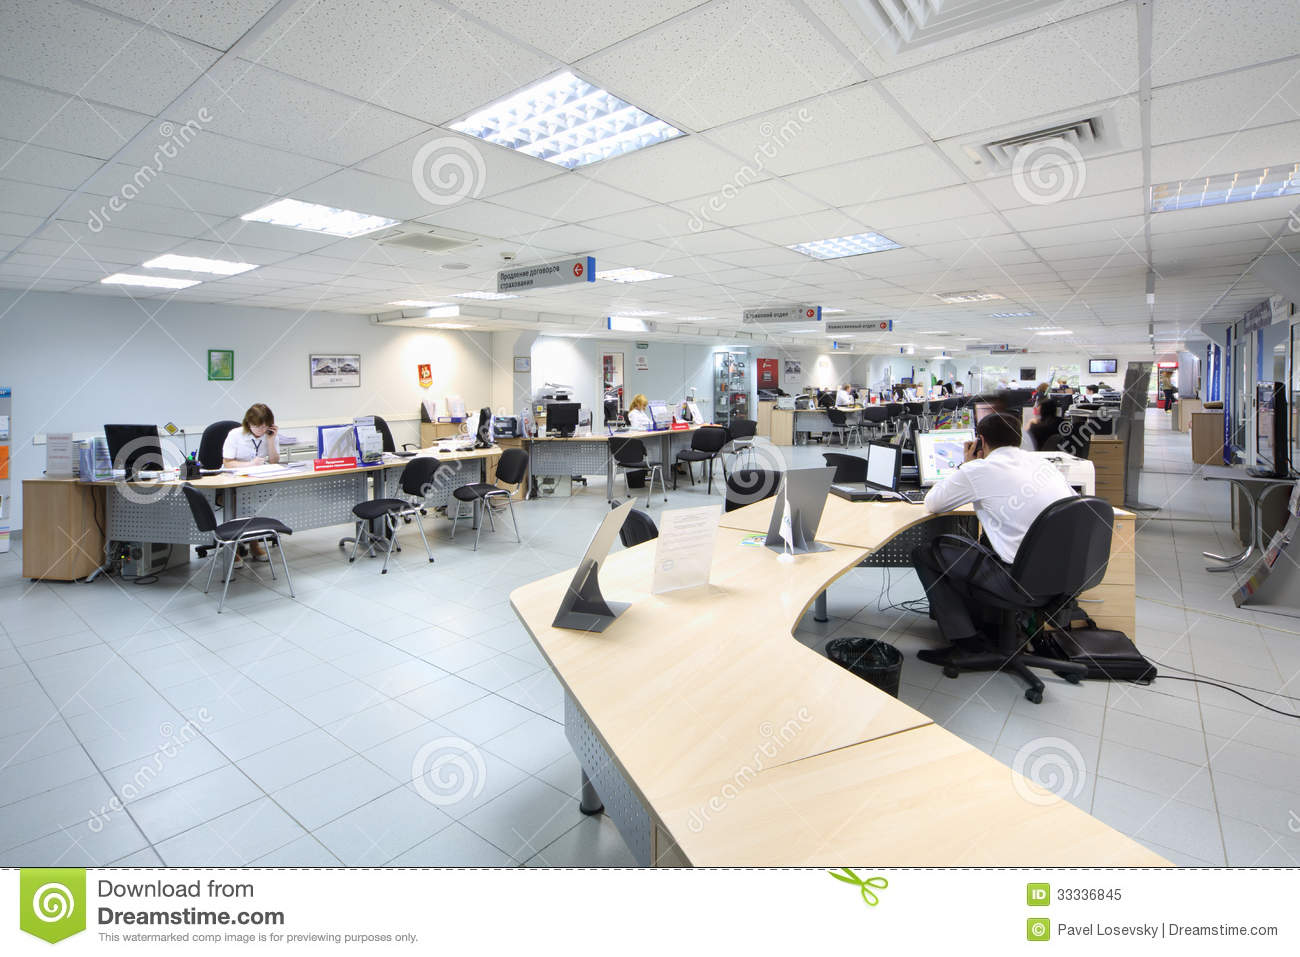 People Work At Computers In Dealership Avtomir Editorial Image   Image